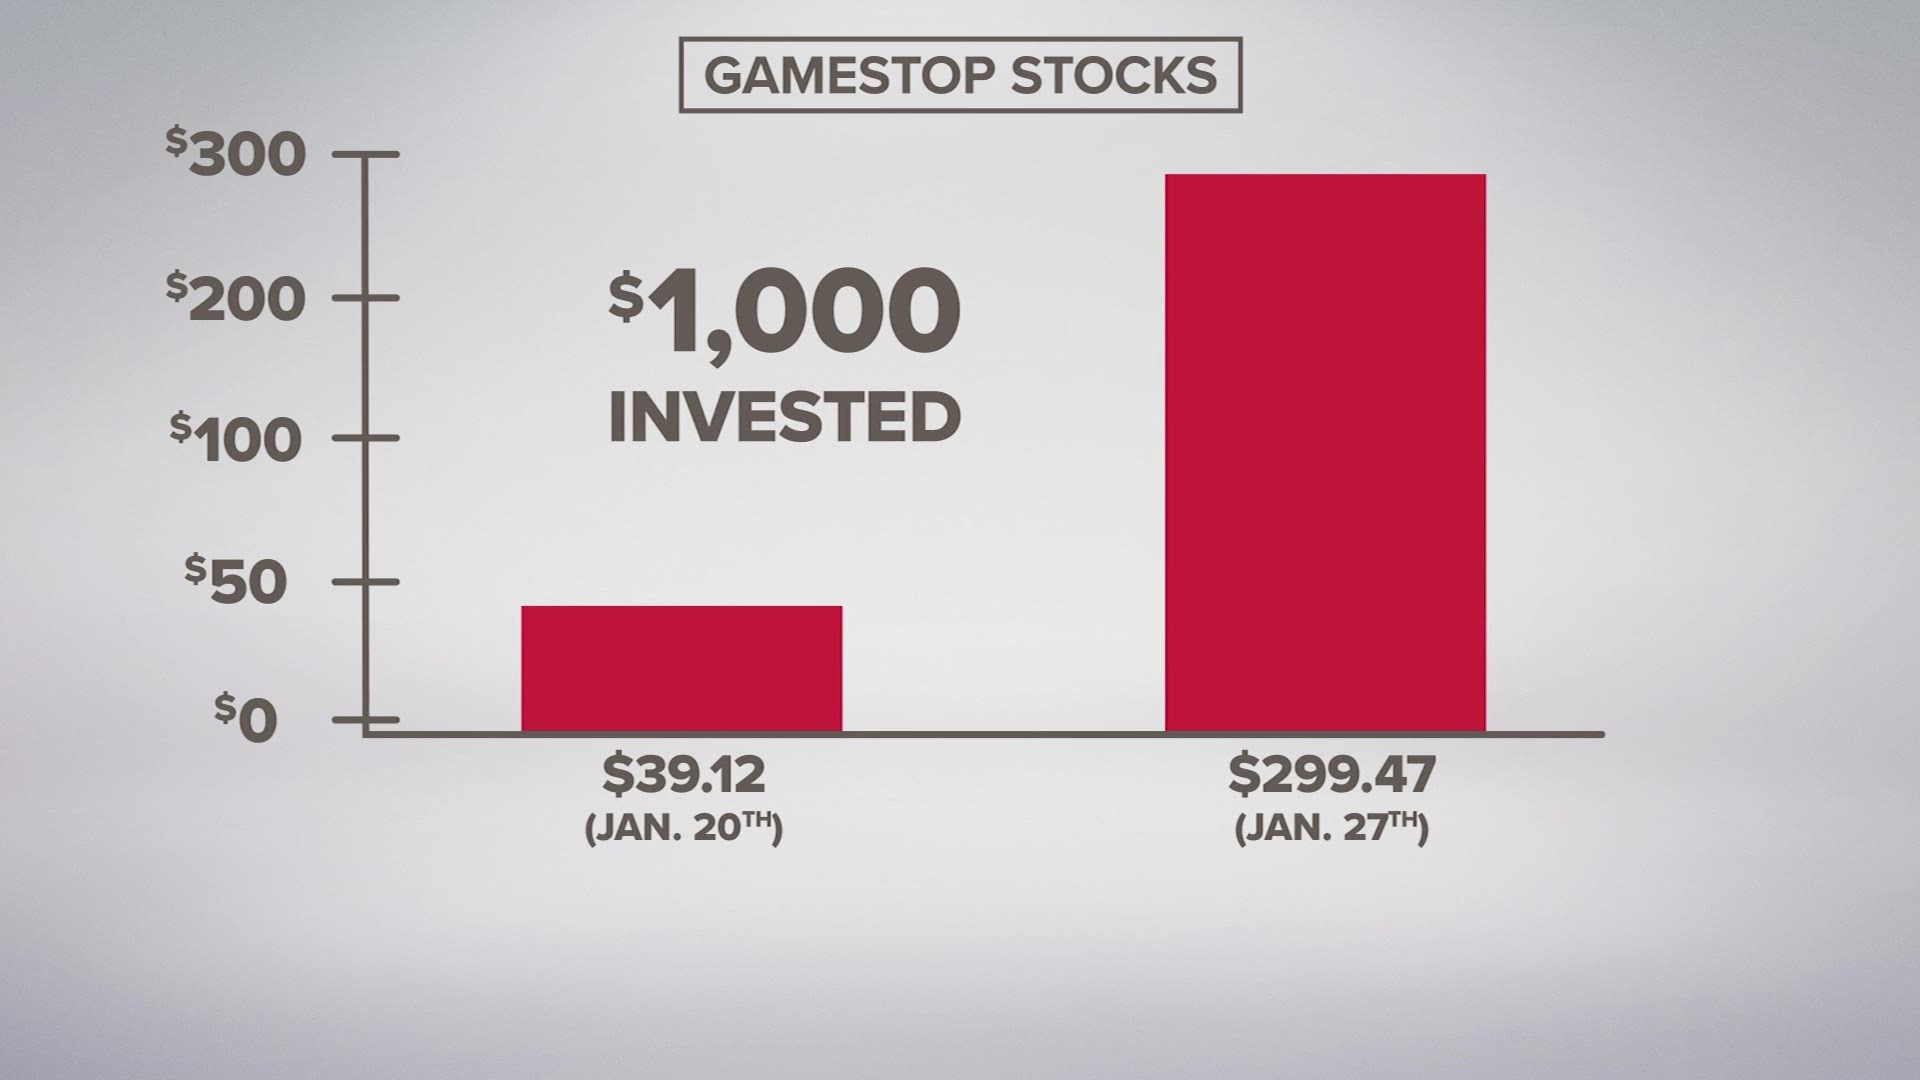 GameStop Stock Soars as Reddit Investors Take On Wall St. - The